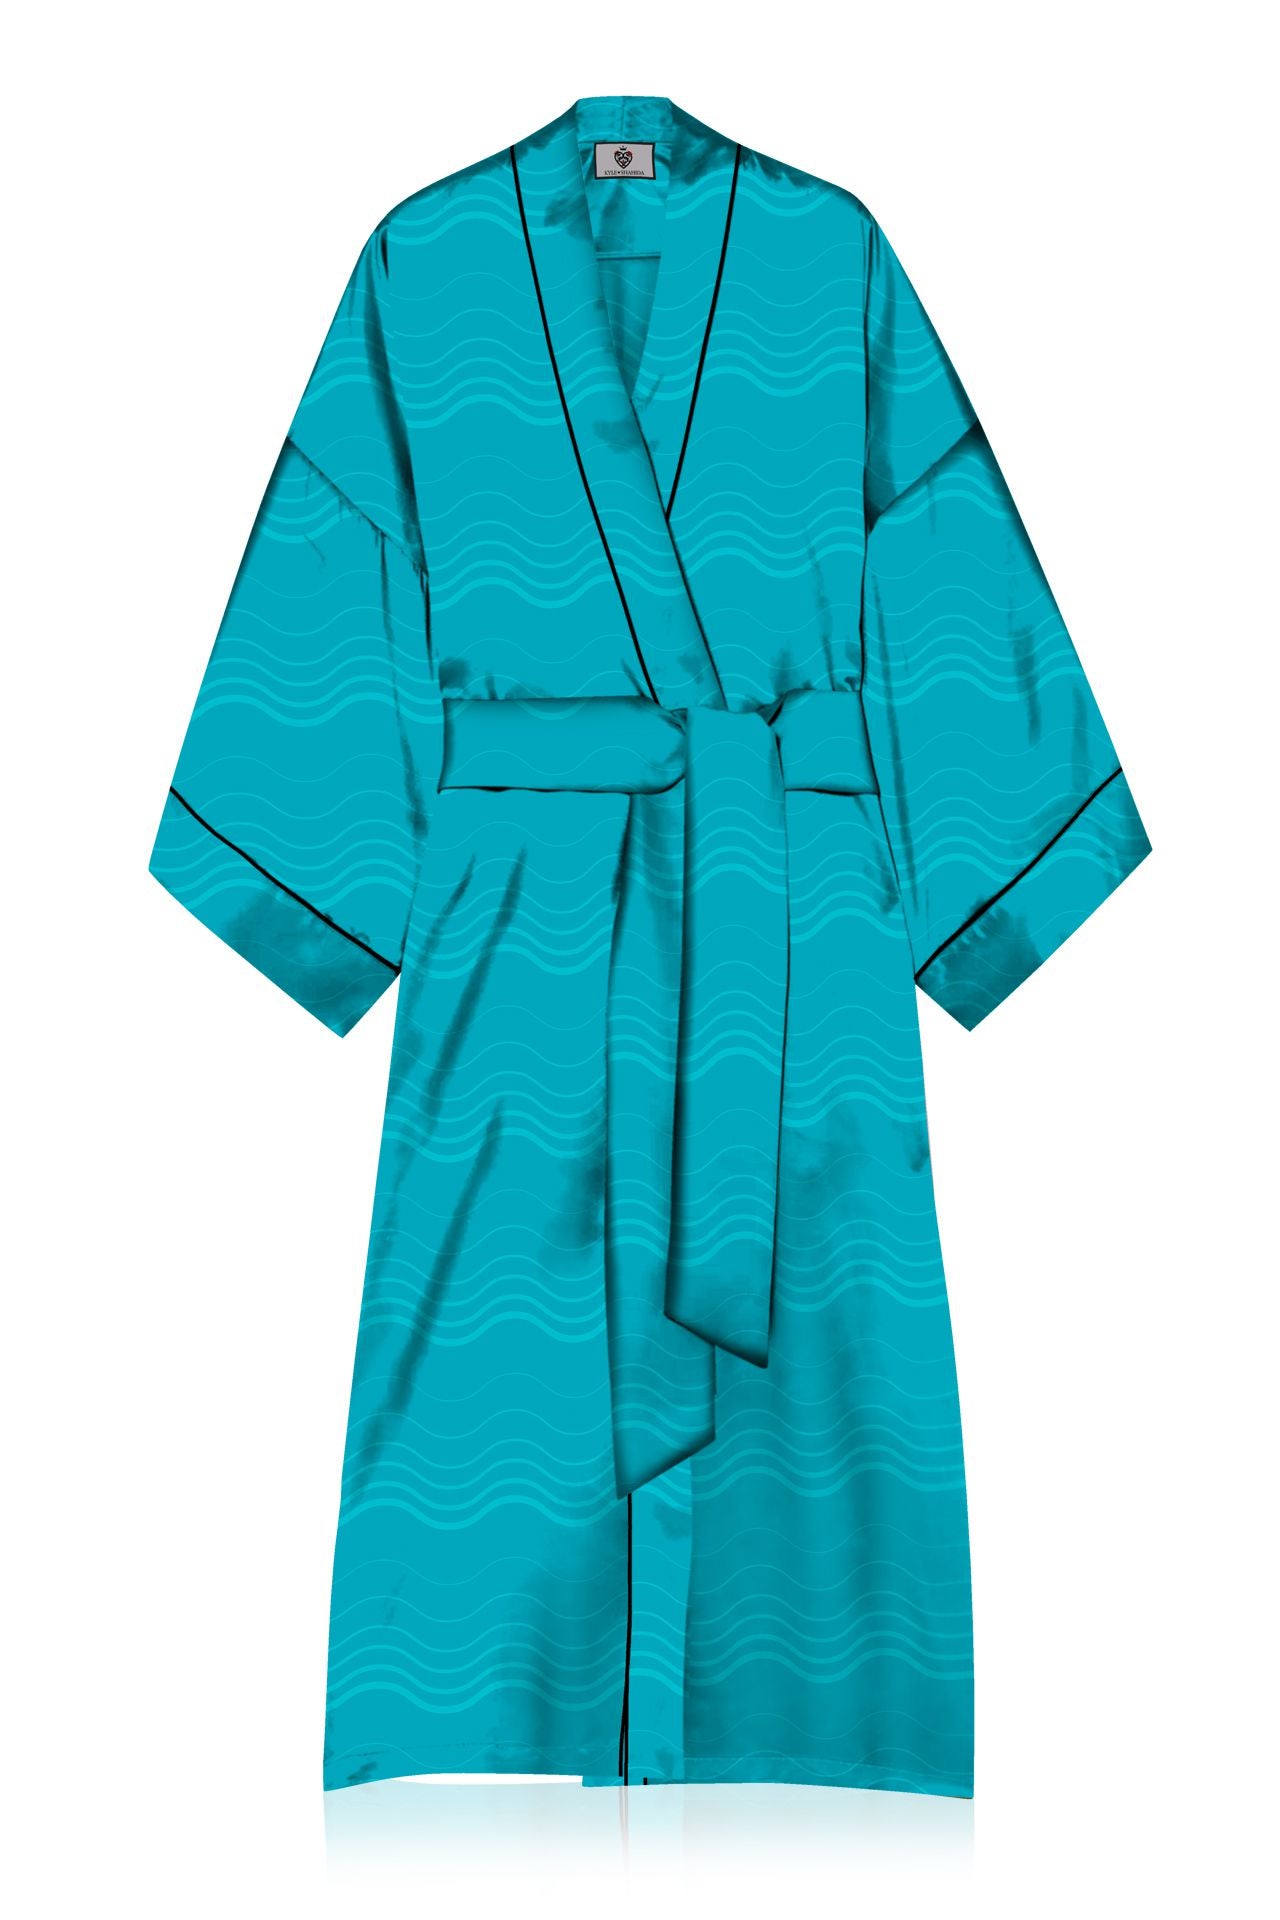 "blue robe womens" "Kyle X Shahida" "printed silk robe" "women's short kimono"